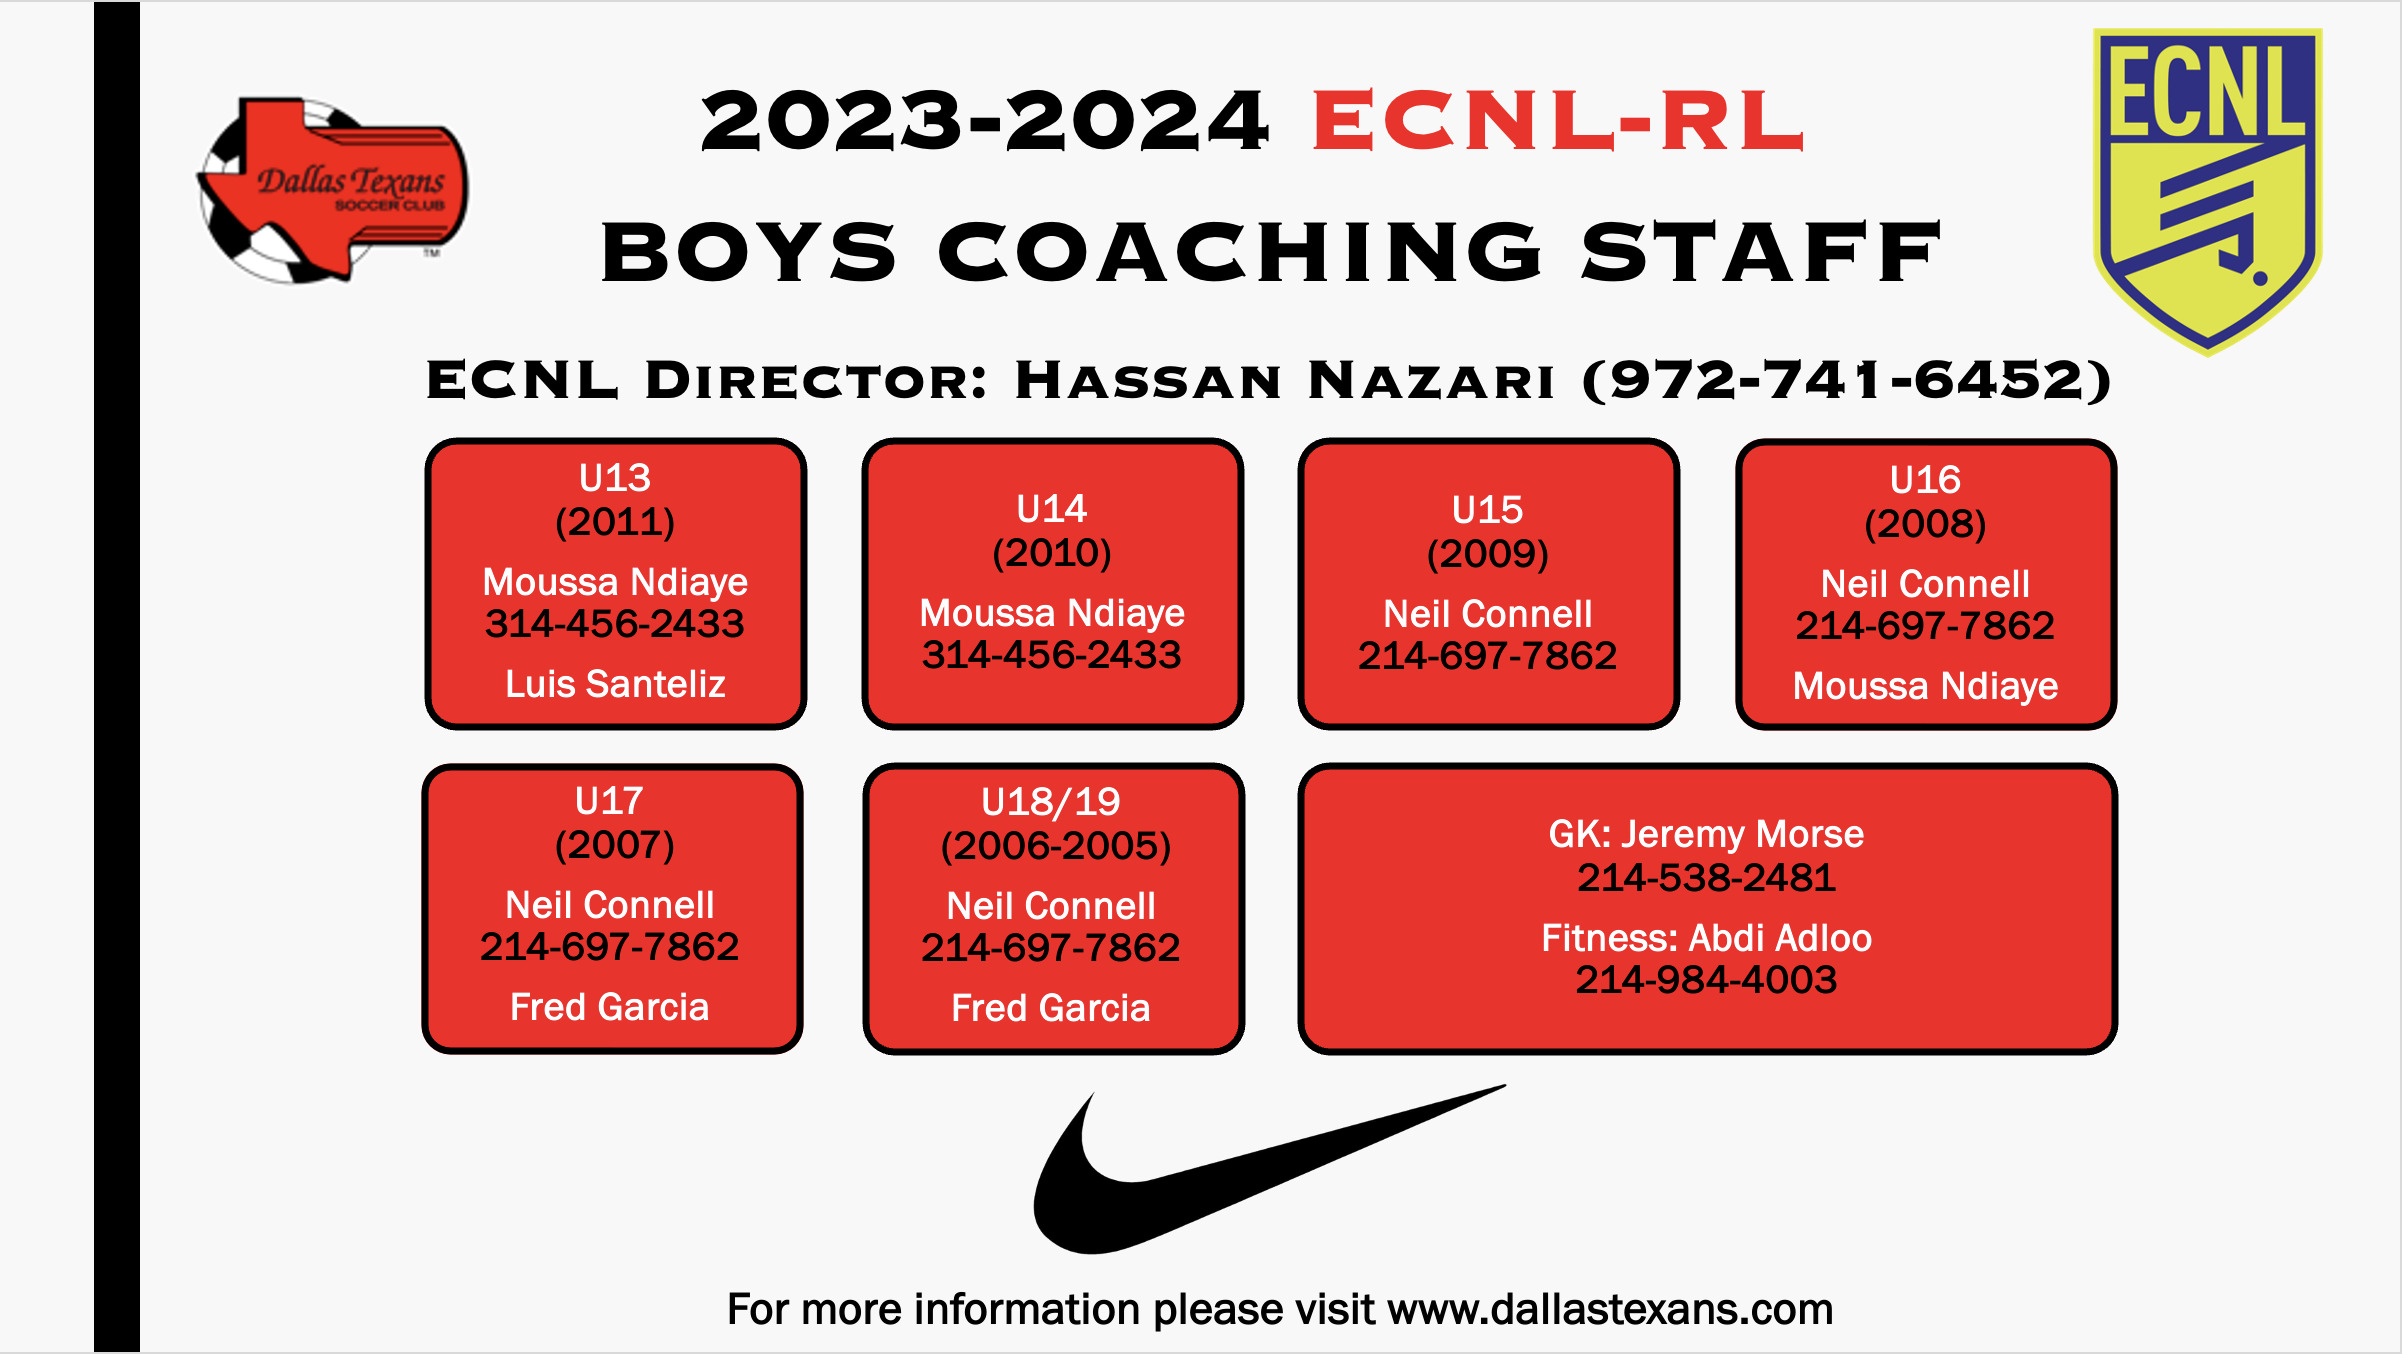 ECNL-RL Boys